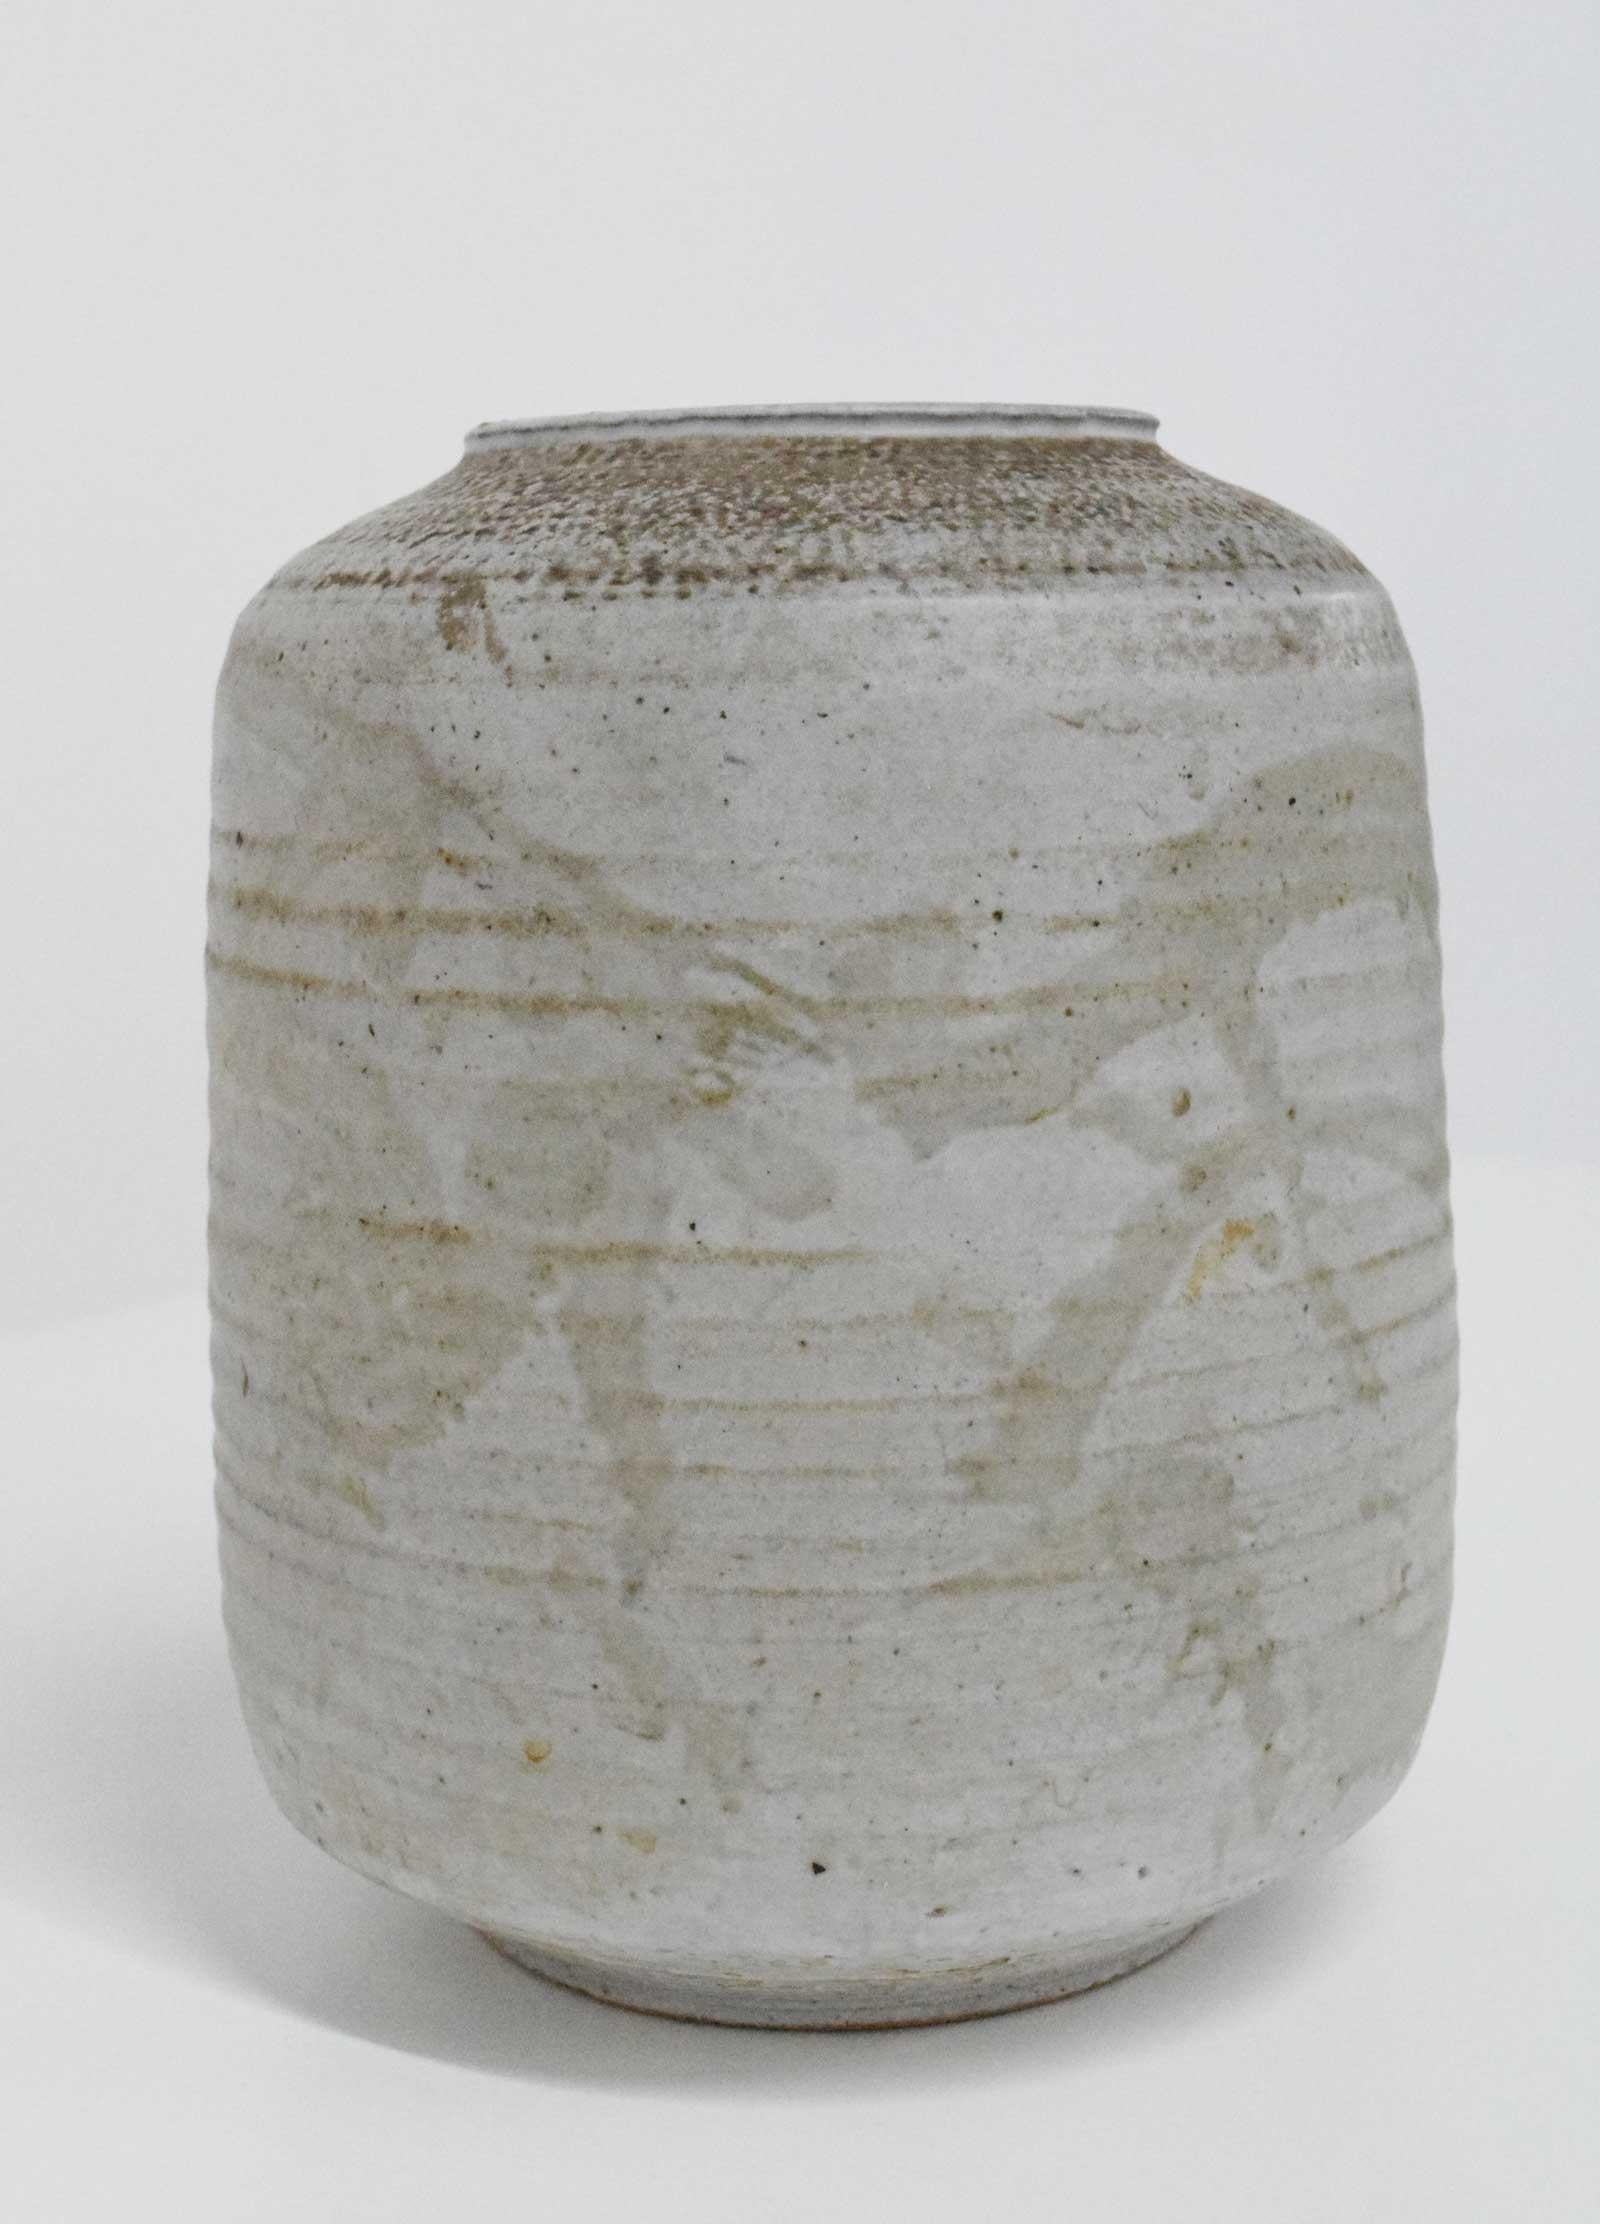 North American Clyde Burt Ceramic Vessel or Vase For Sale